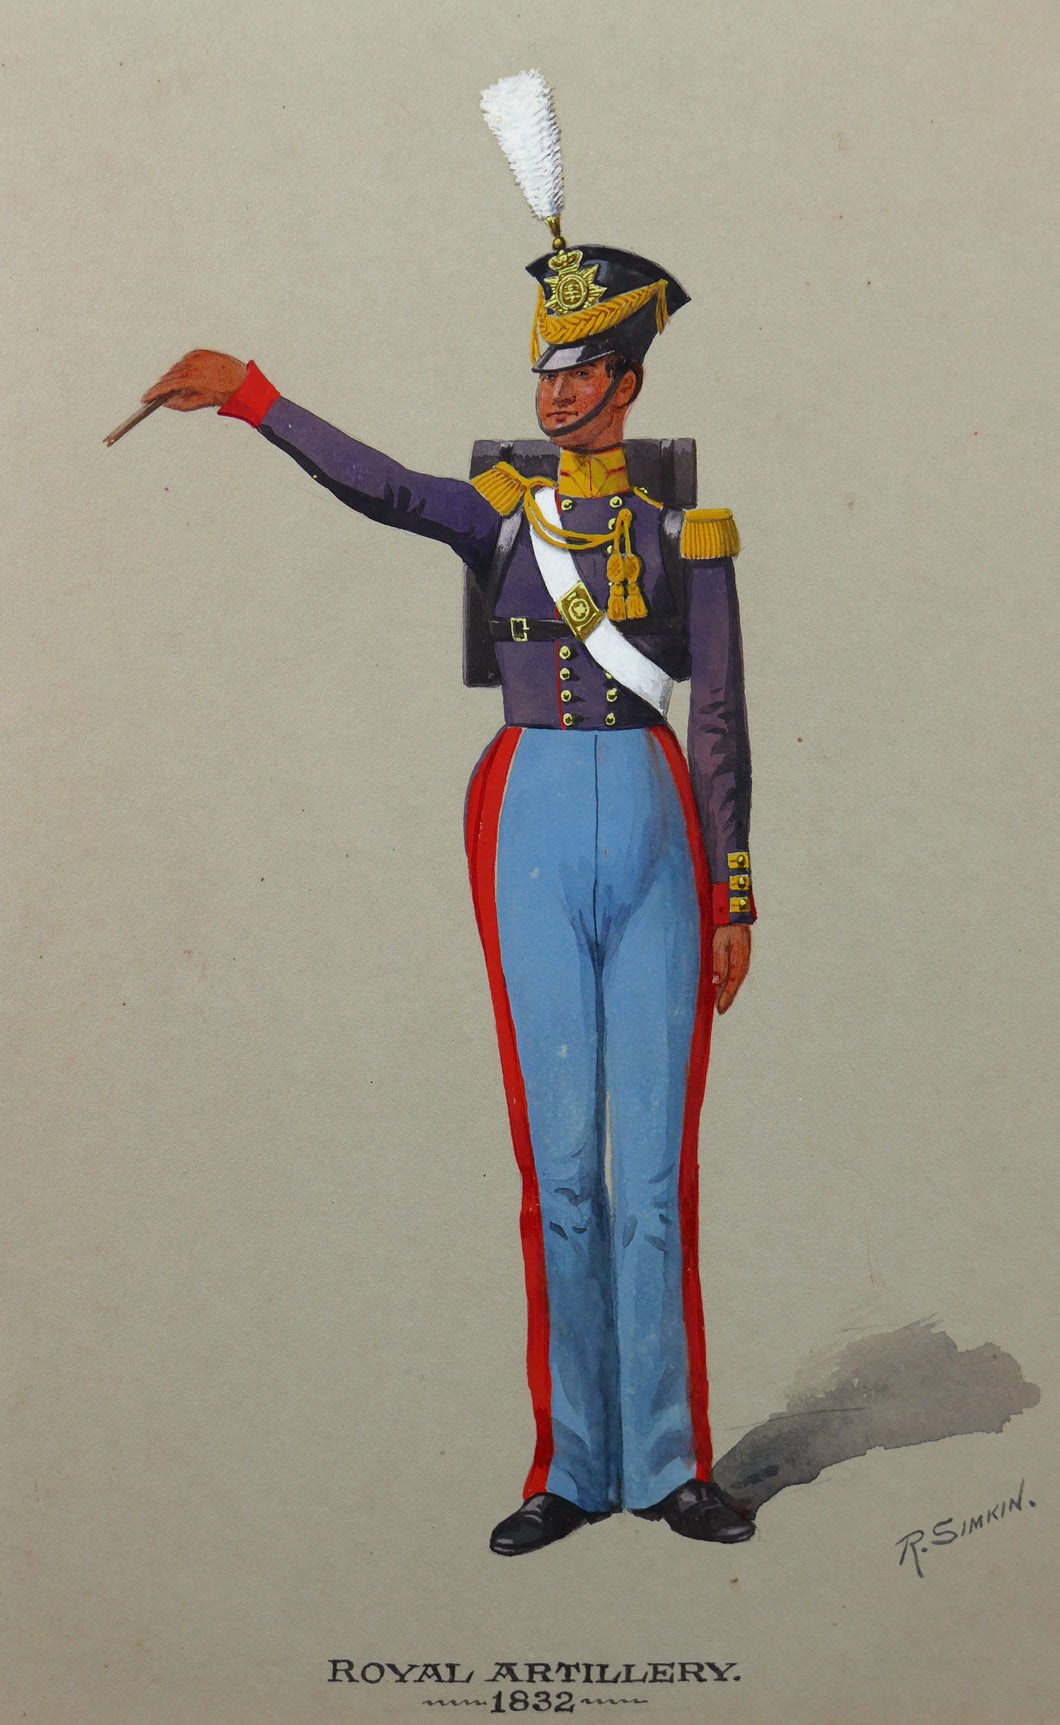 Royal Regiment of Artillery - Gunner (1832) by Simkin, 1890